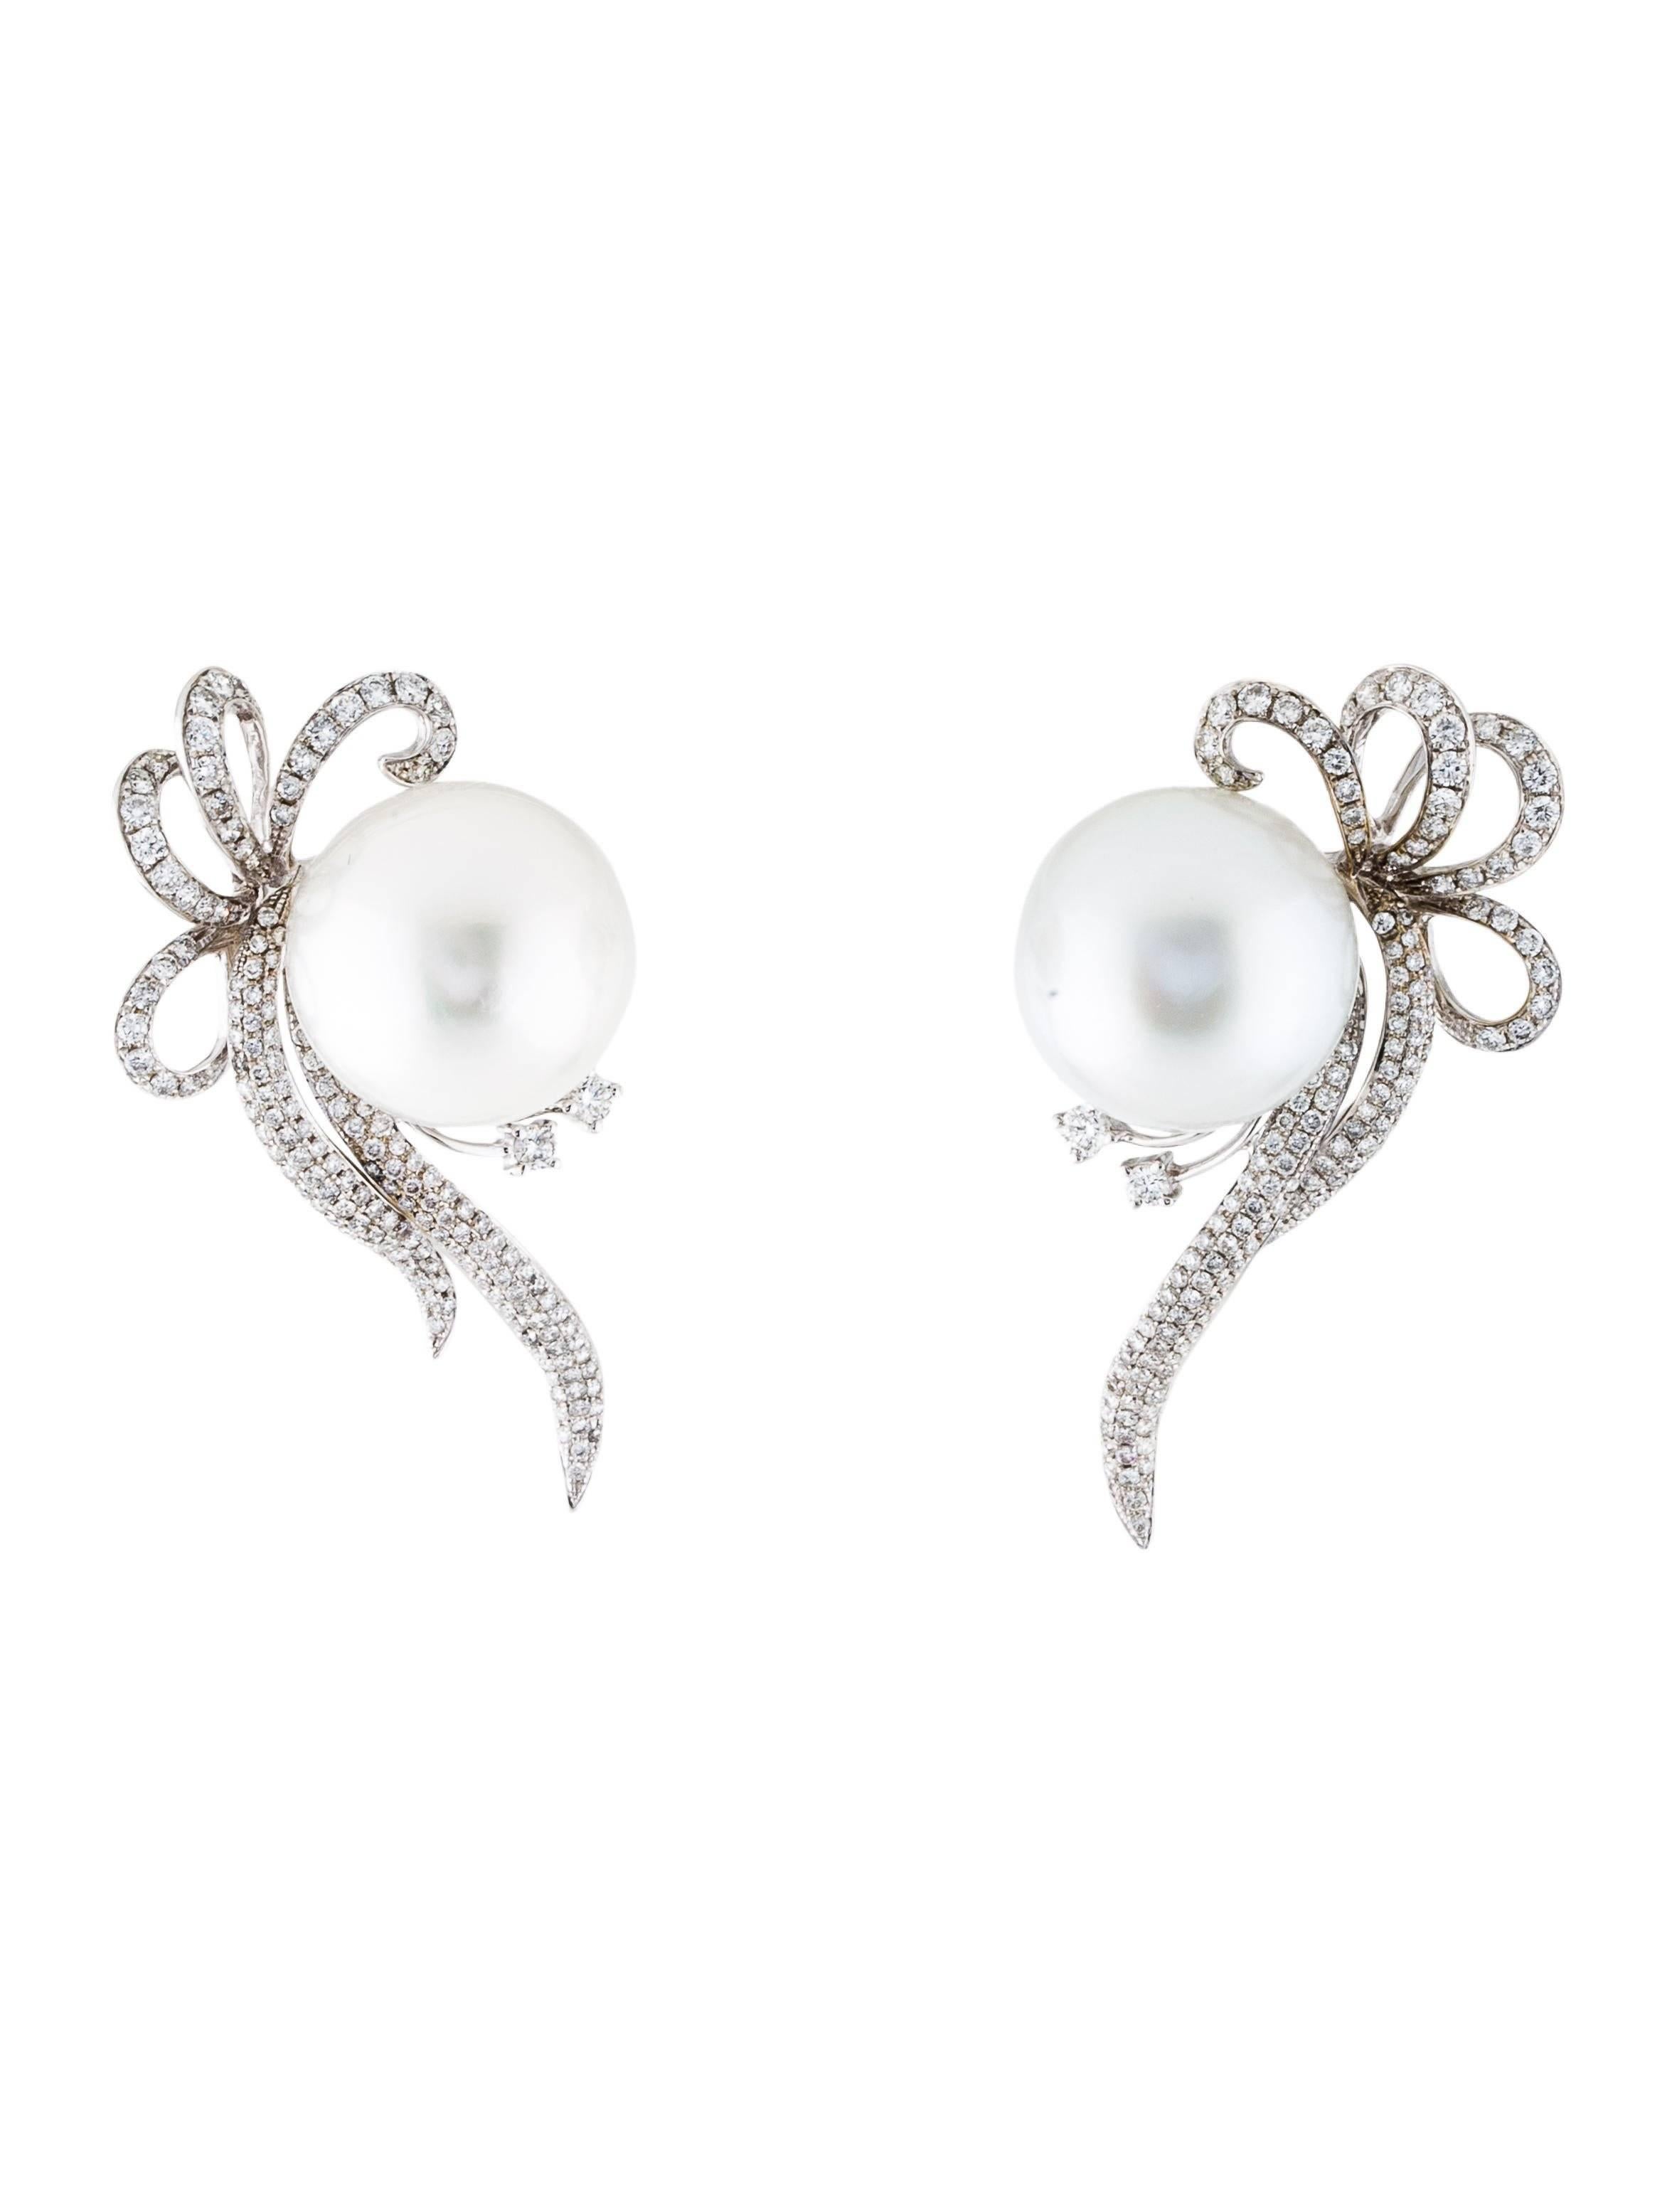 Stunning 18 Karat Gold 3.56 Carat Diamond Cultured Pearl Earrings 1